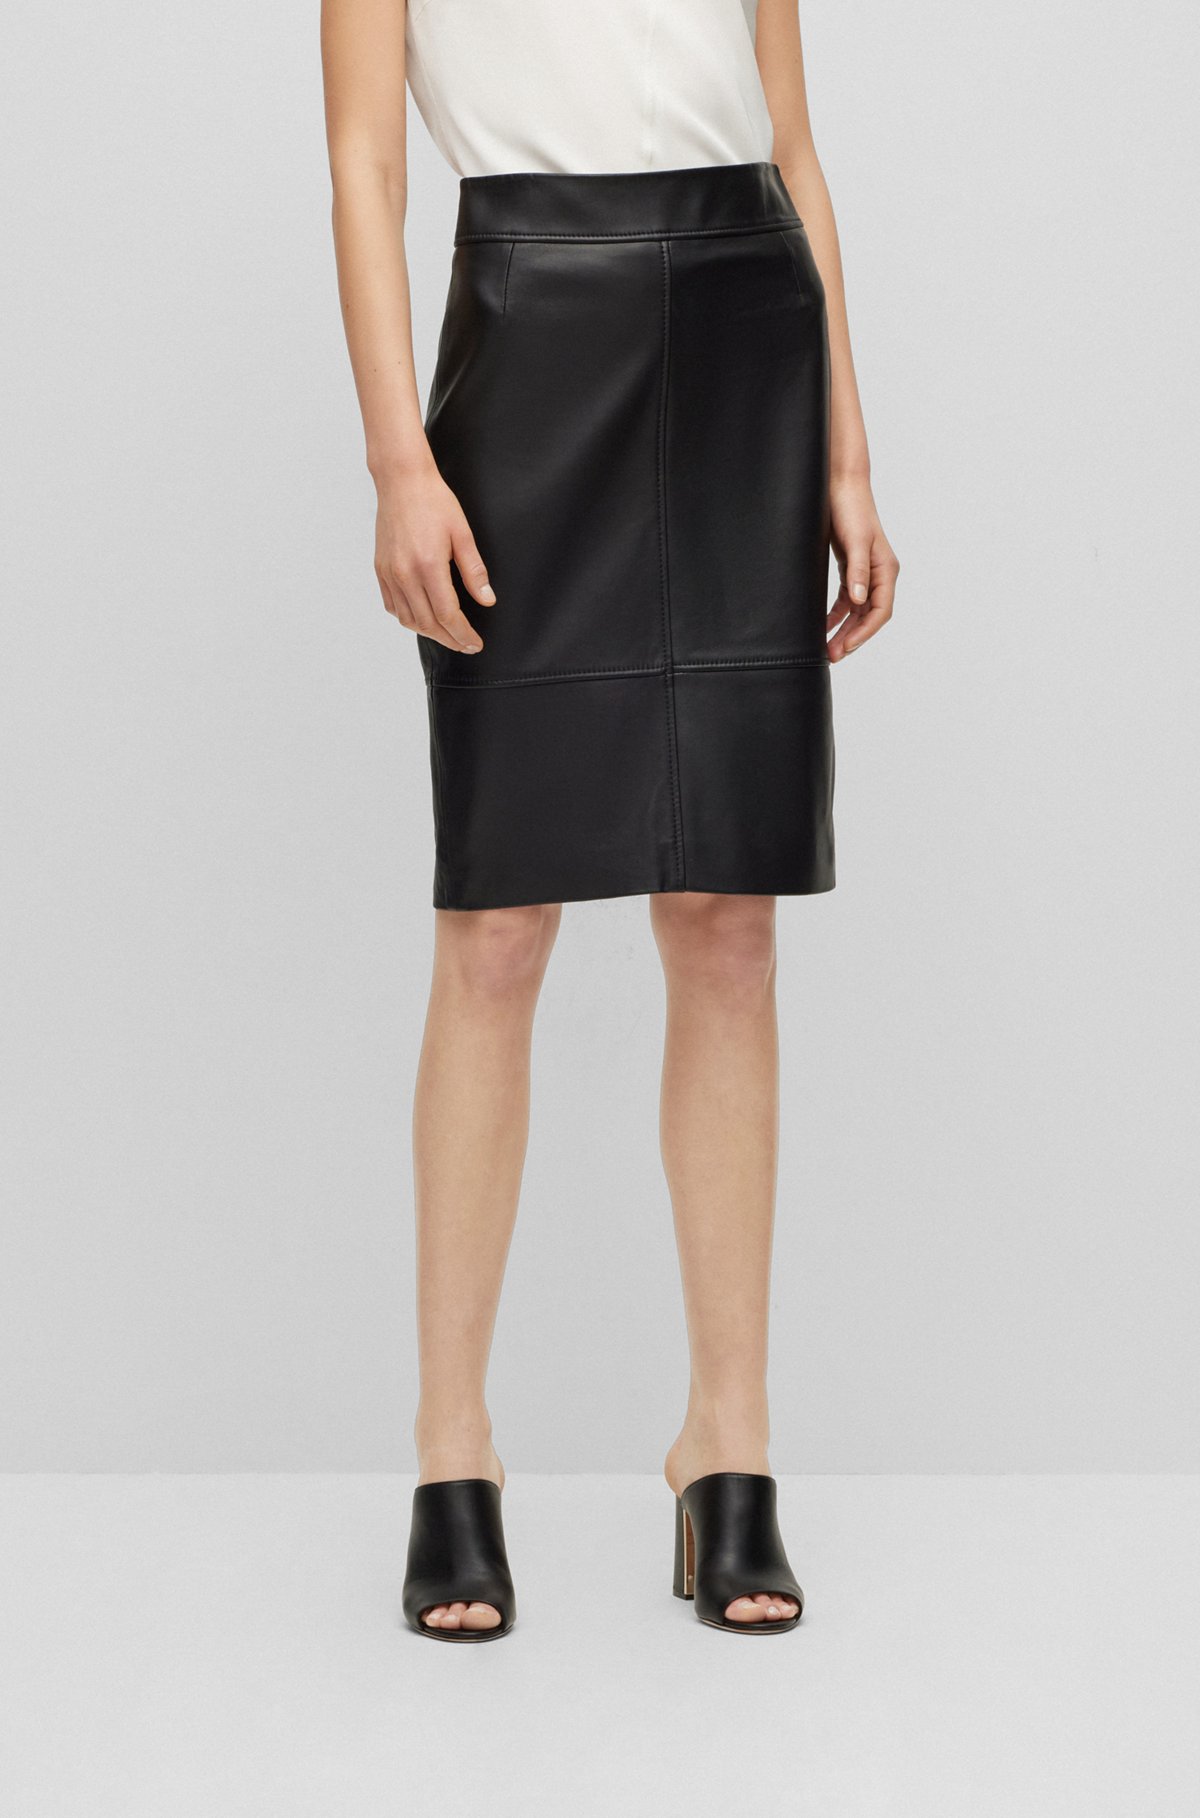 Regular-fit pencil skirt in soft leather, Black